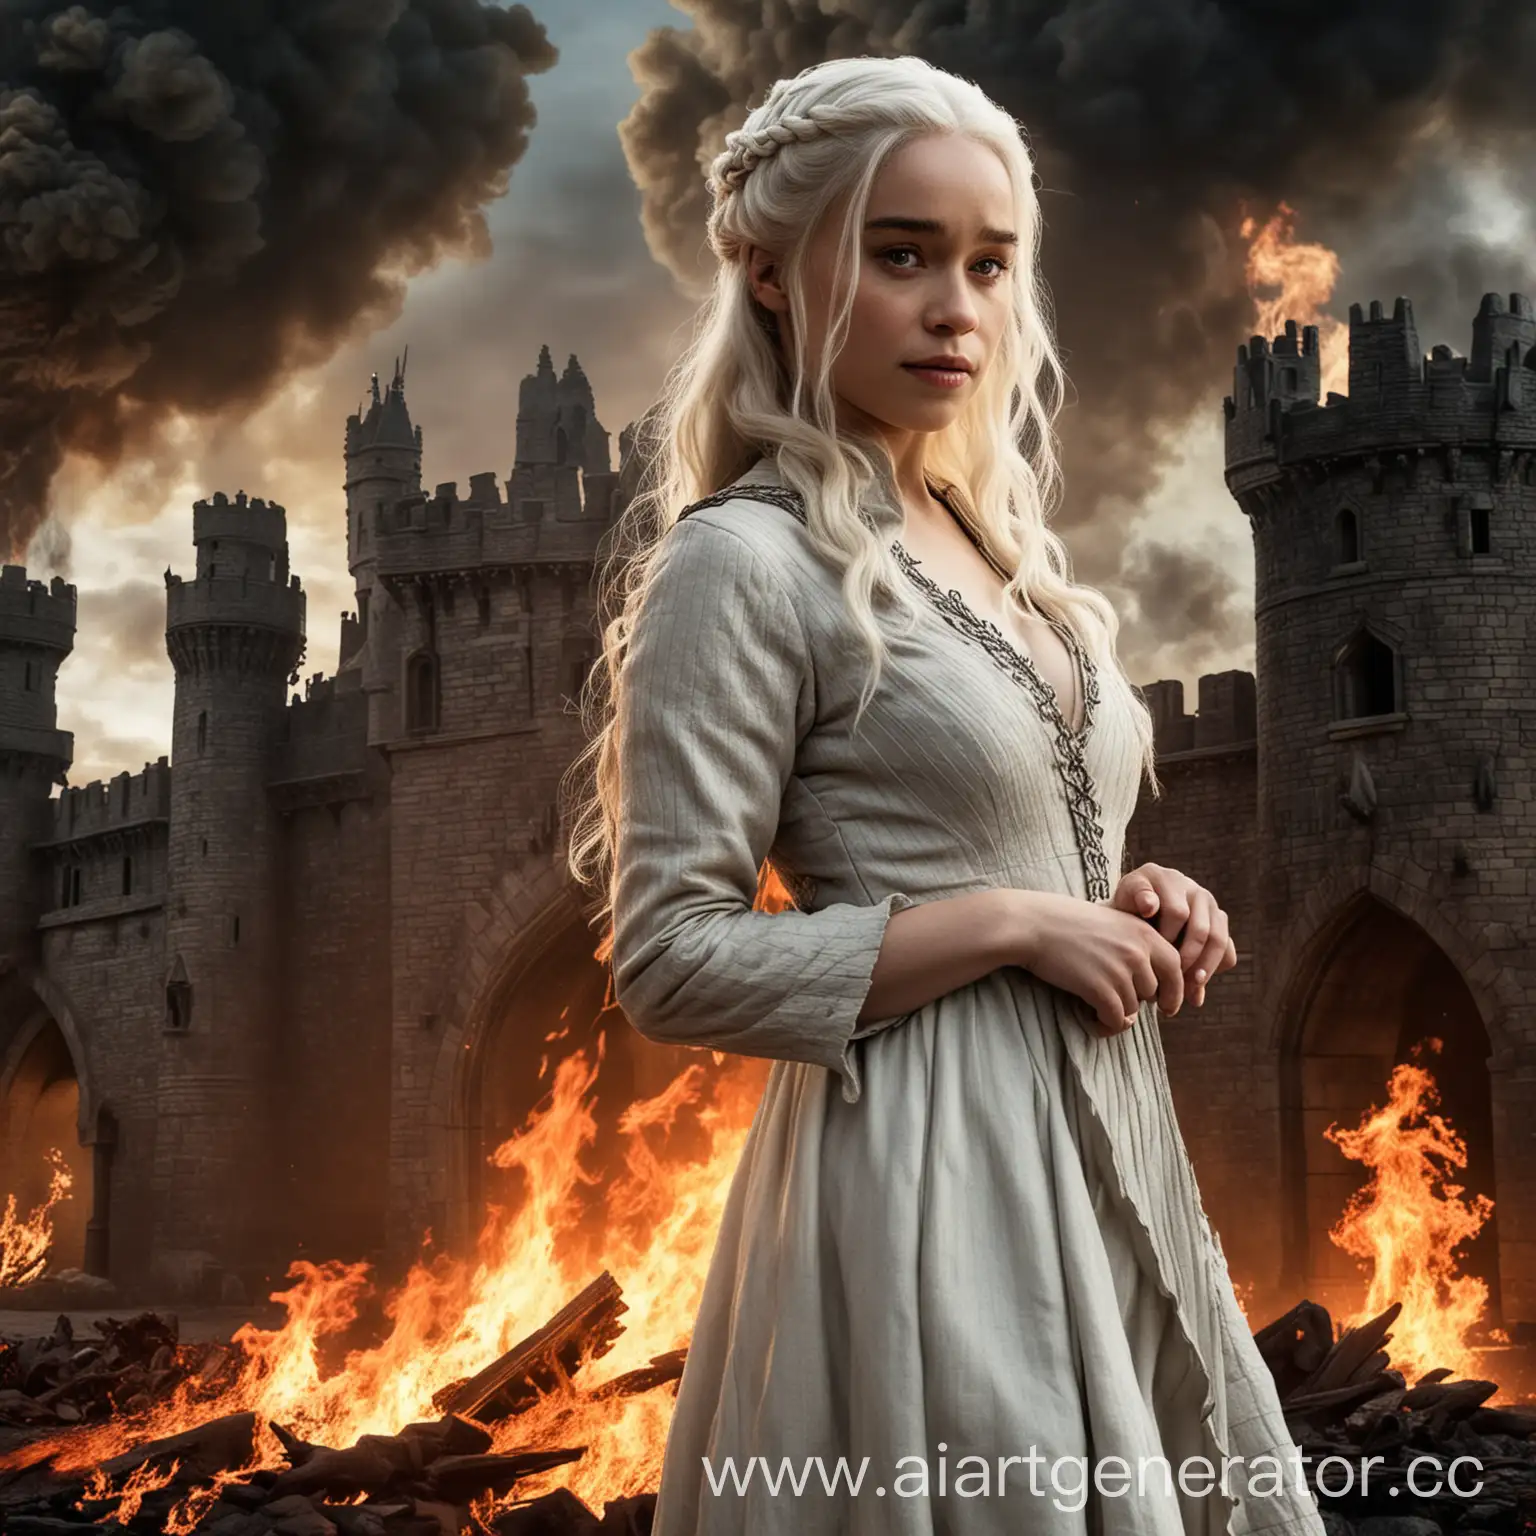 Three-Dragons-Breathing-Fire-at-Emilia-Clarke-as-Daenerys-Targaryen-in-Game-of-Thrones